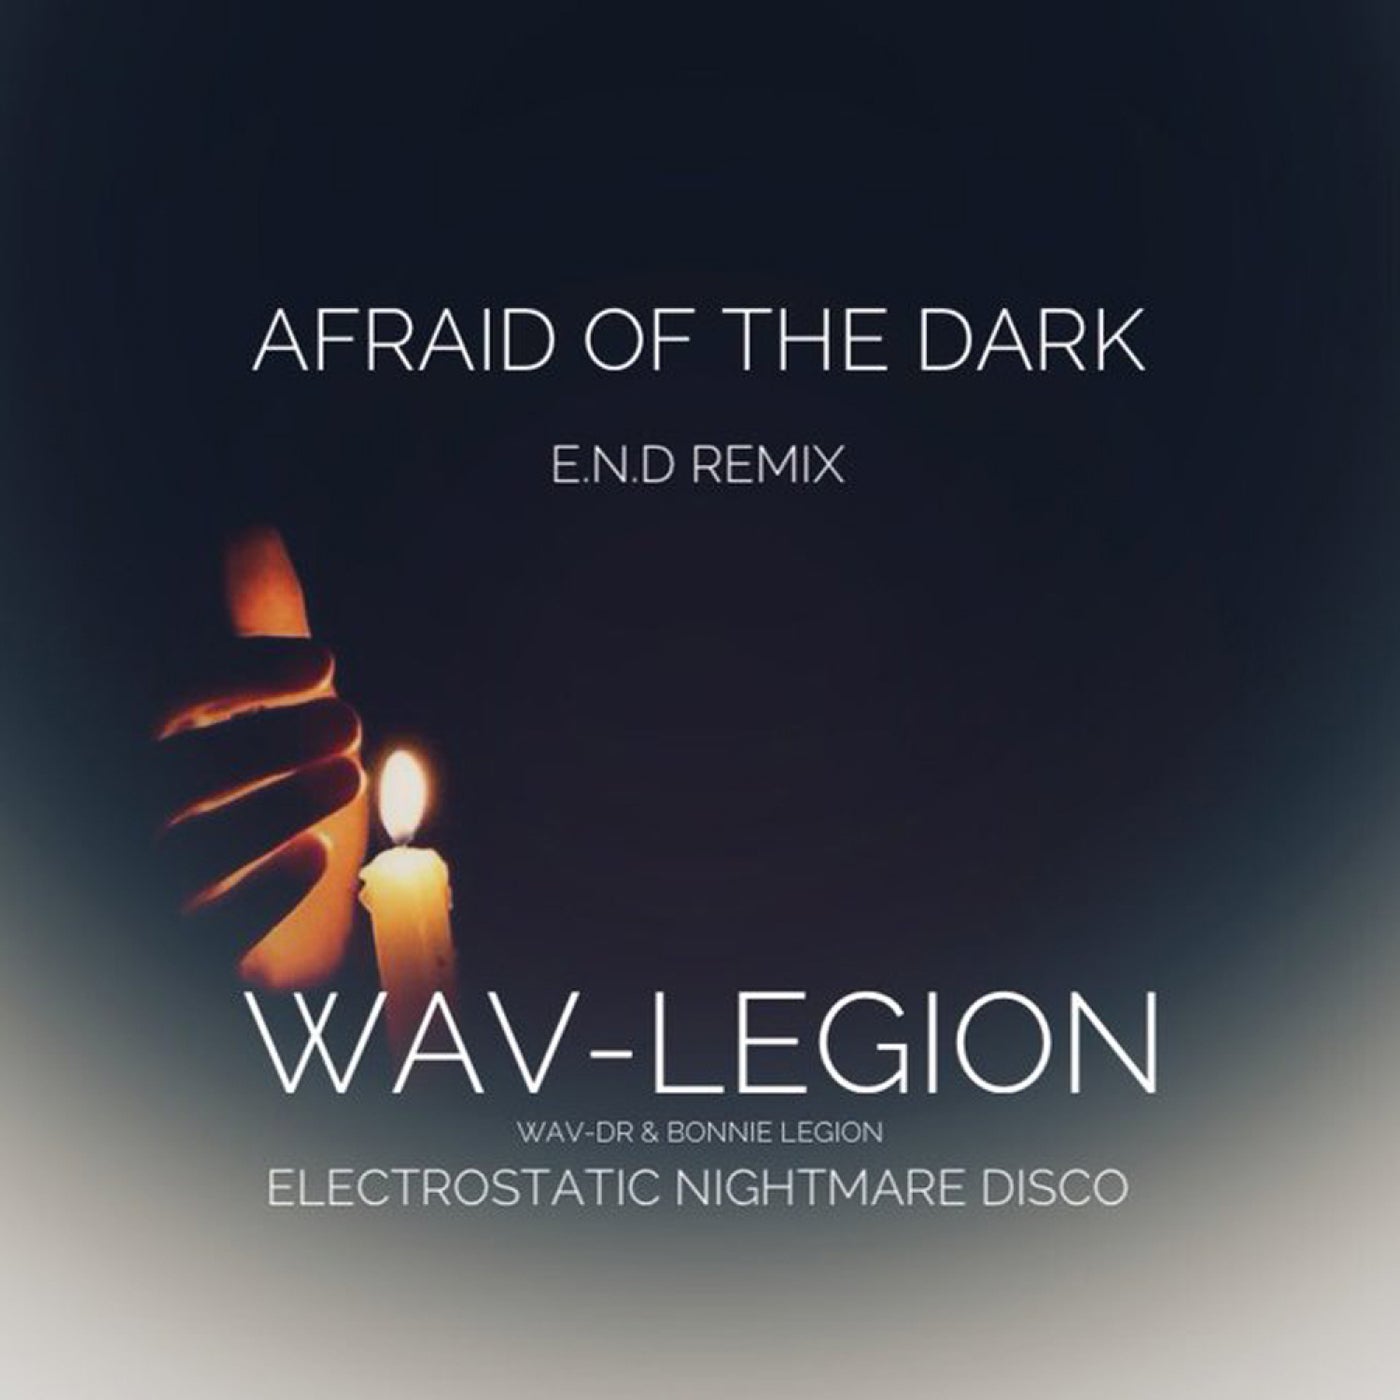 dark legions remix